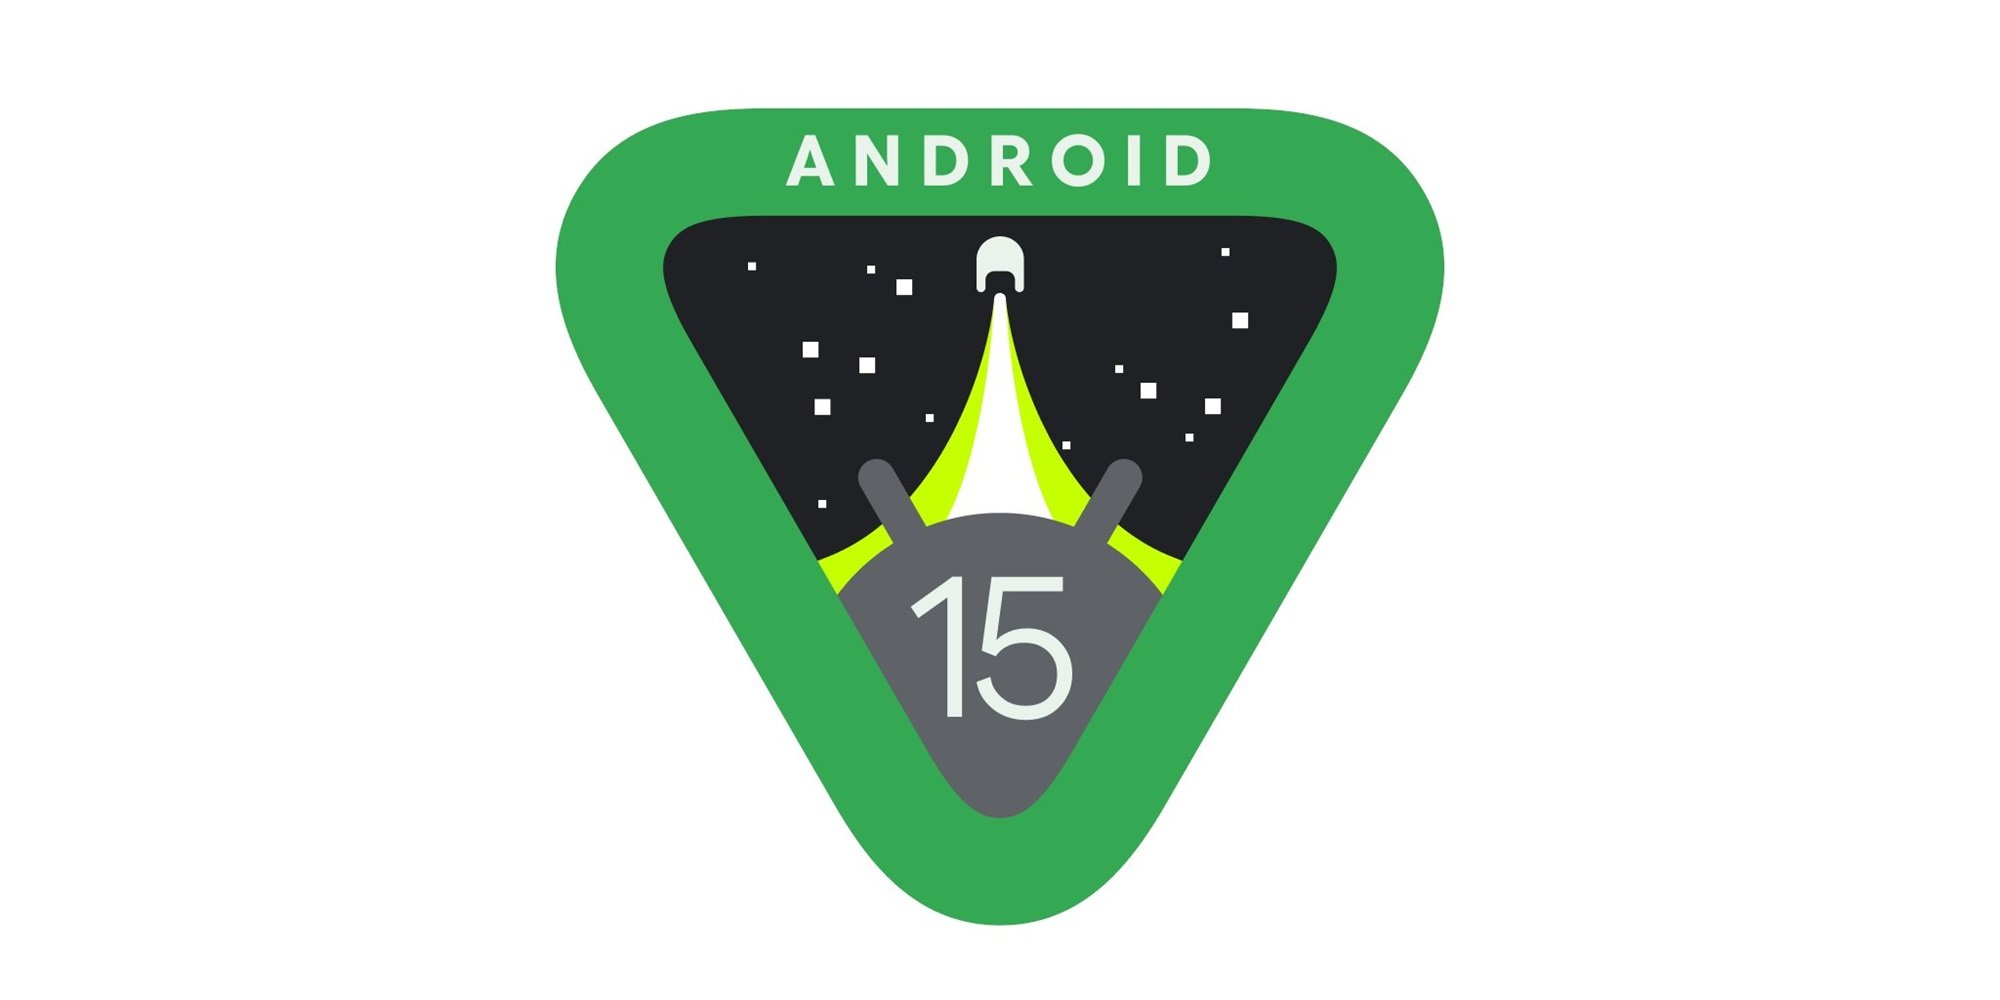 Google Android 15 logo